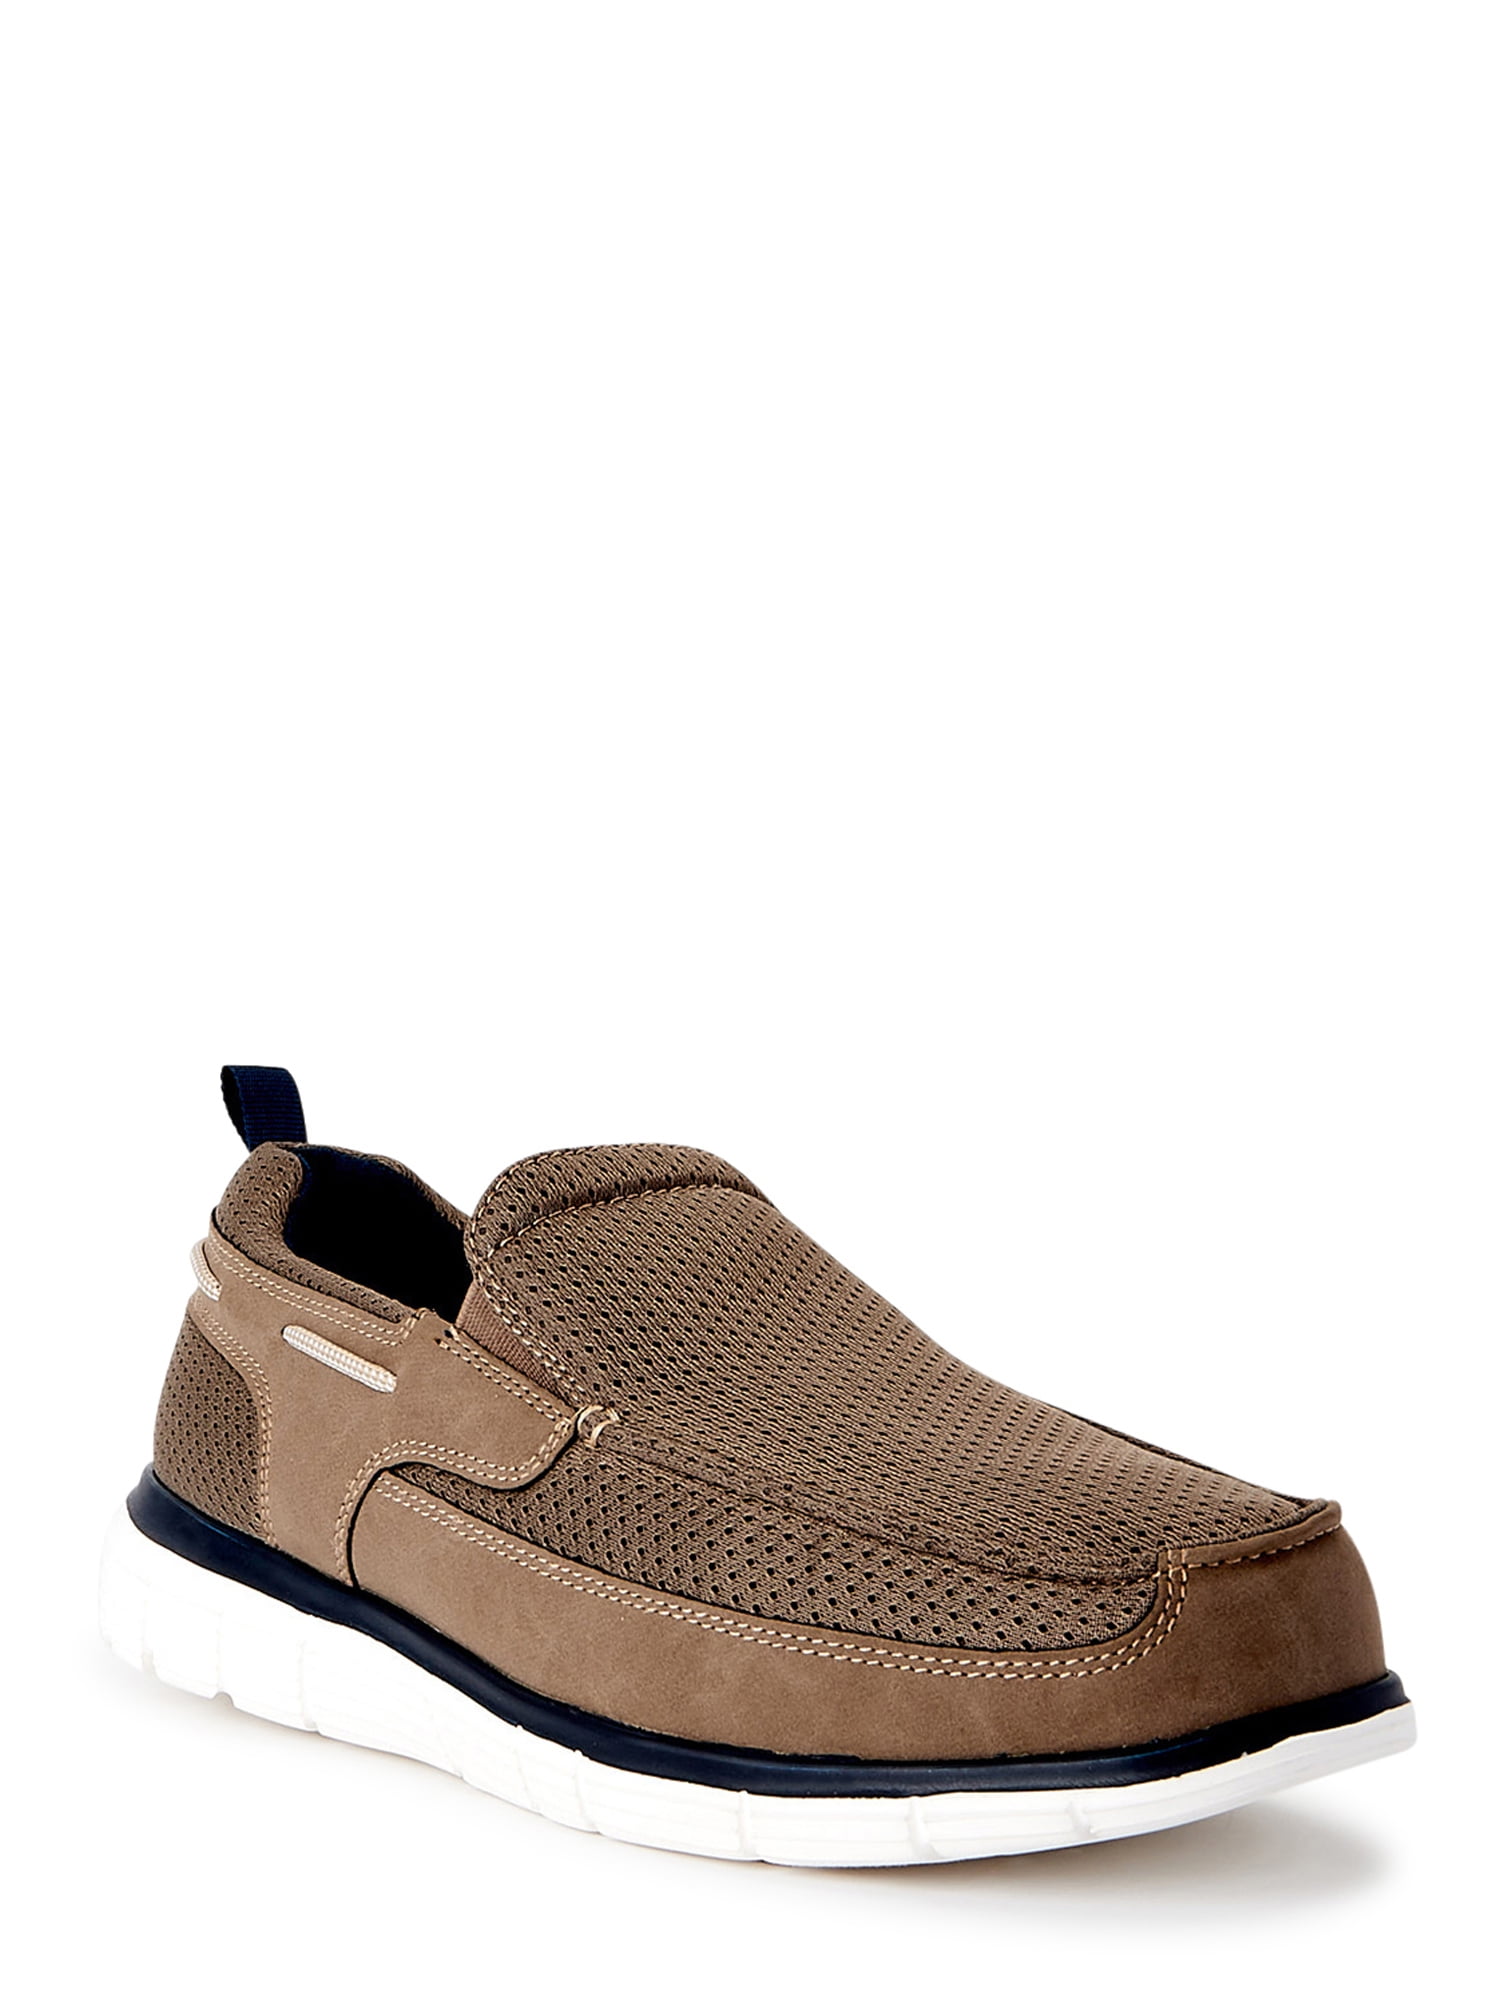 George Men’s Kendan Slip-On Shoes